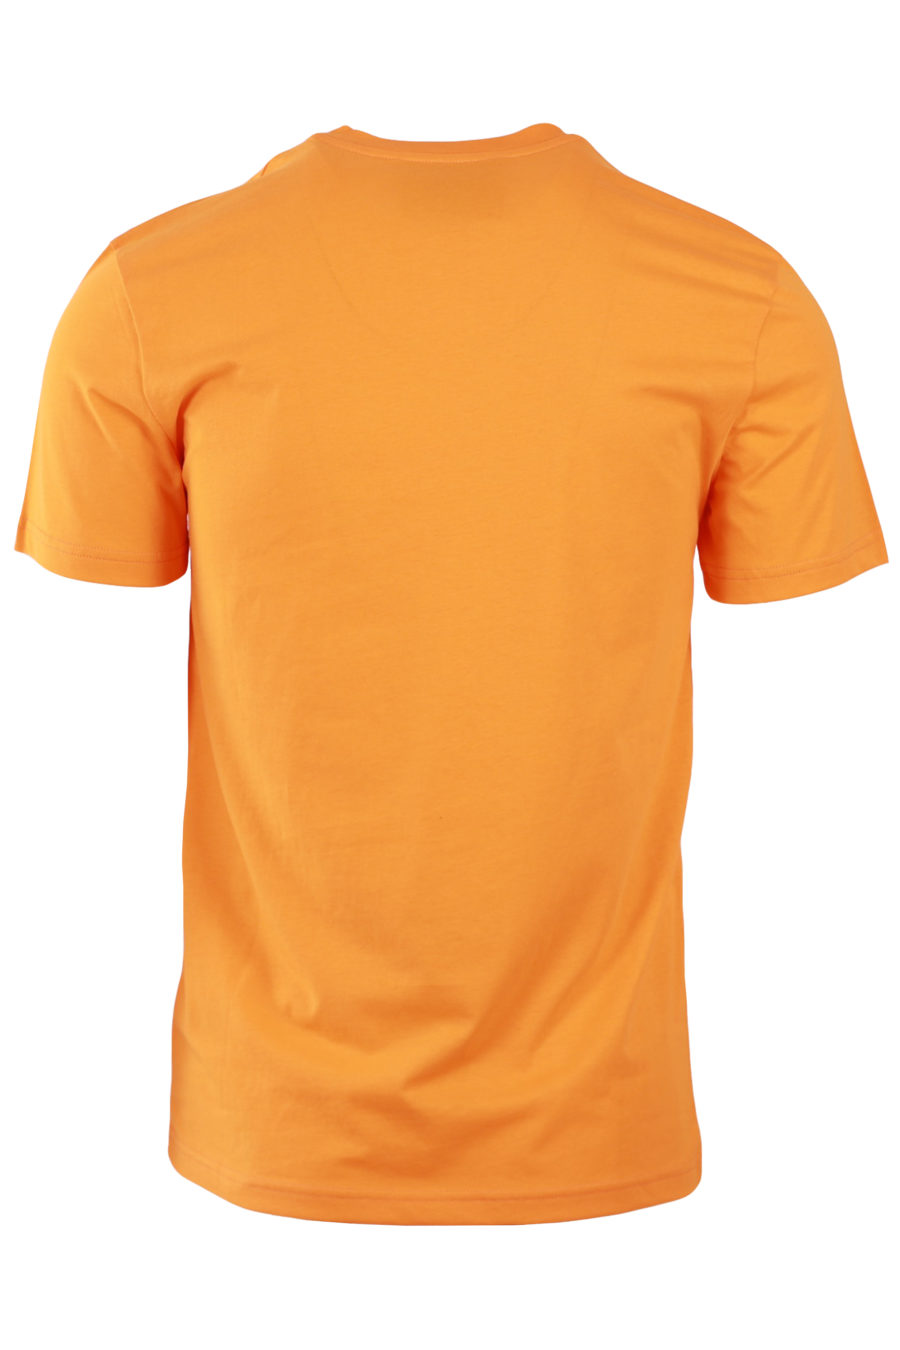 Camiseta naranja con logo doble pregunta - 14777291dd33c66642cdd34b46a012b67a0bcfb2